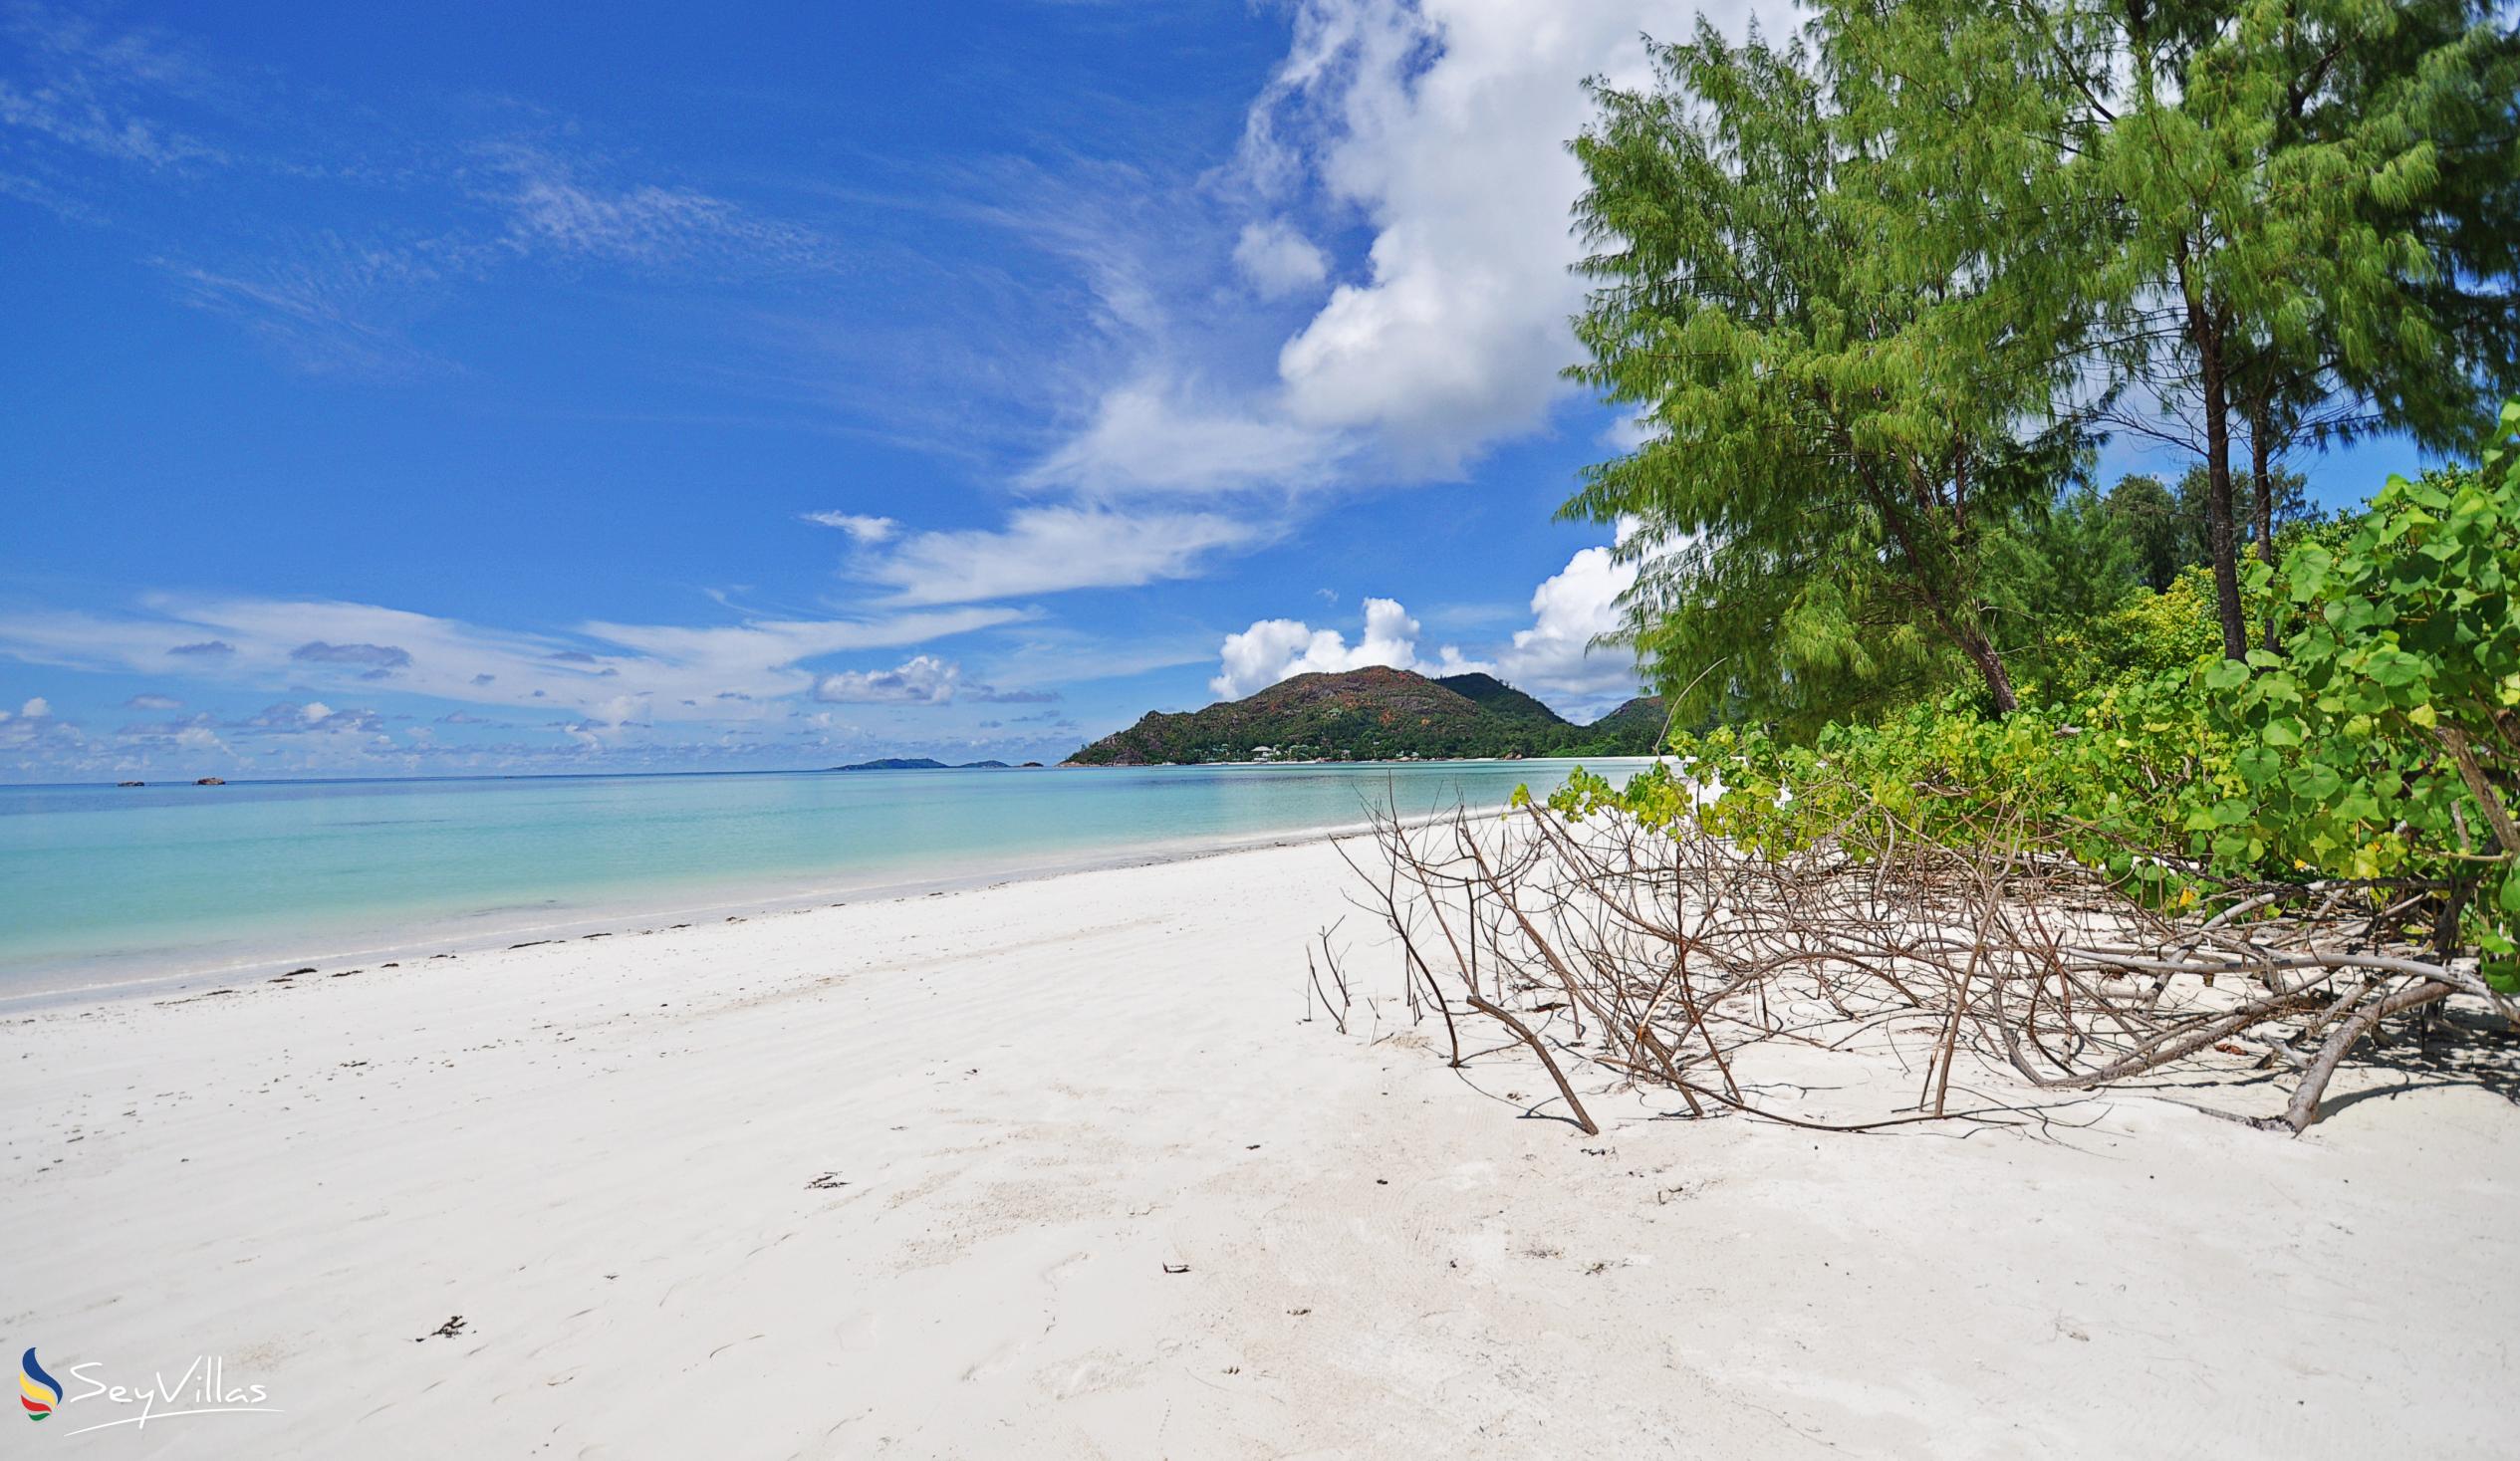 Photo 74: Cote d'Or Footprints - Beaches - Praslin (Seychelles)